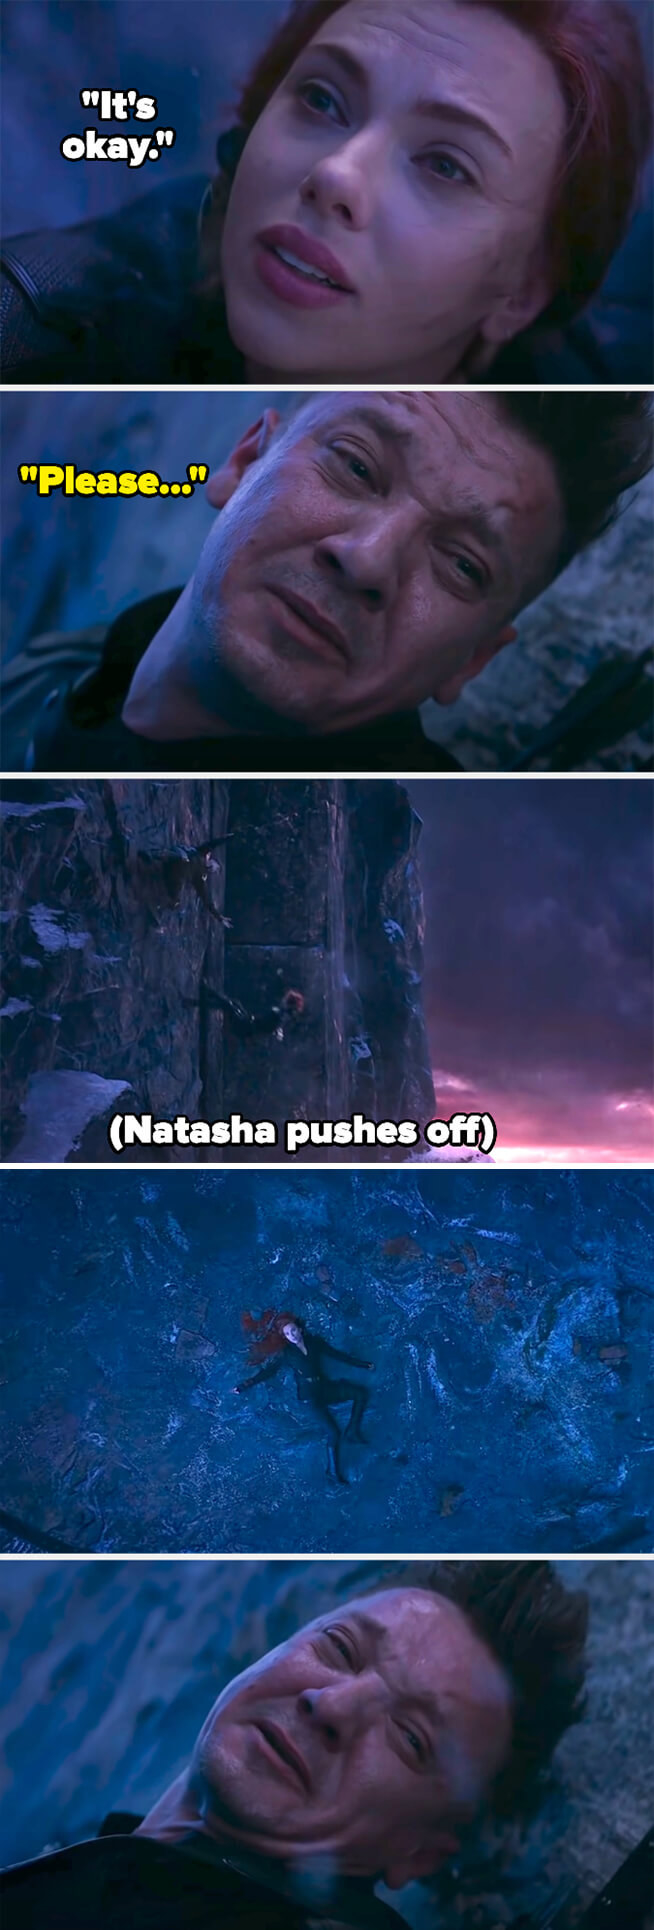 natasha pushes herself off the cliff